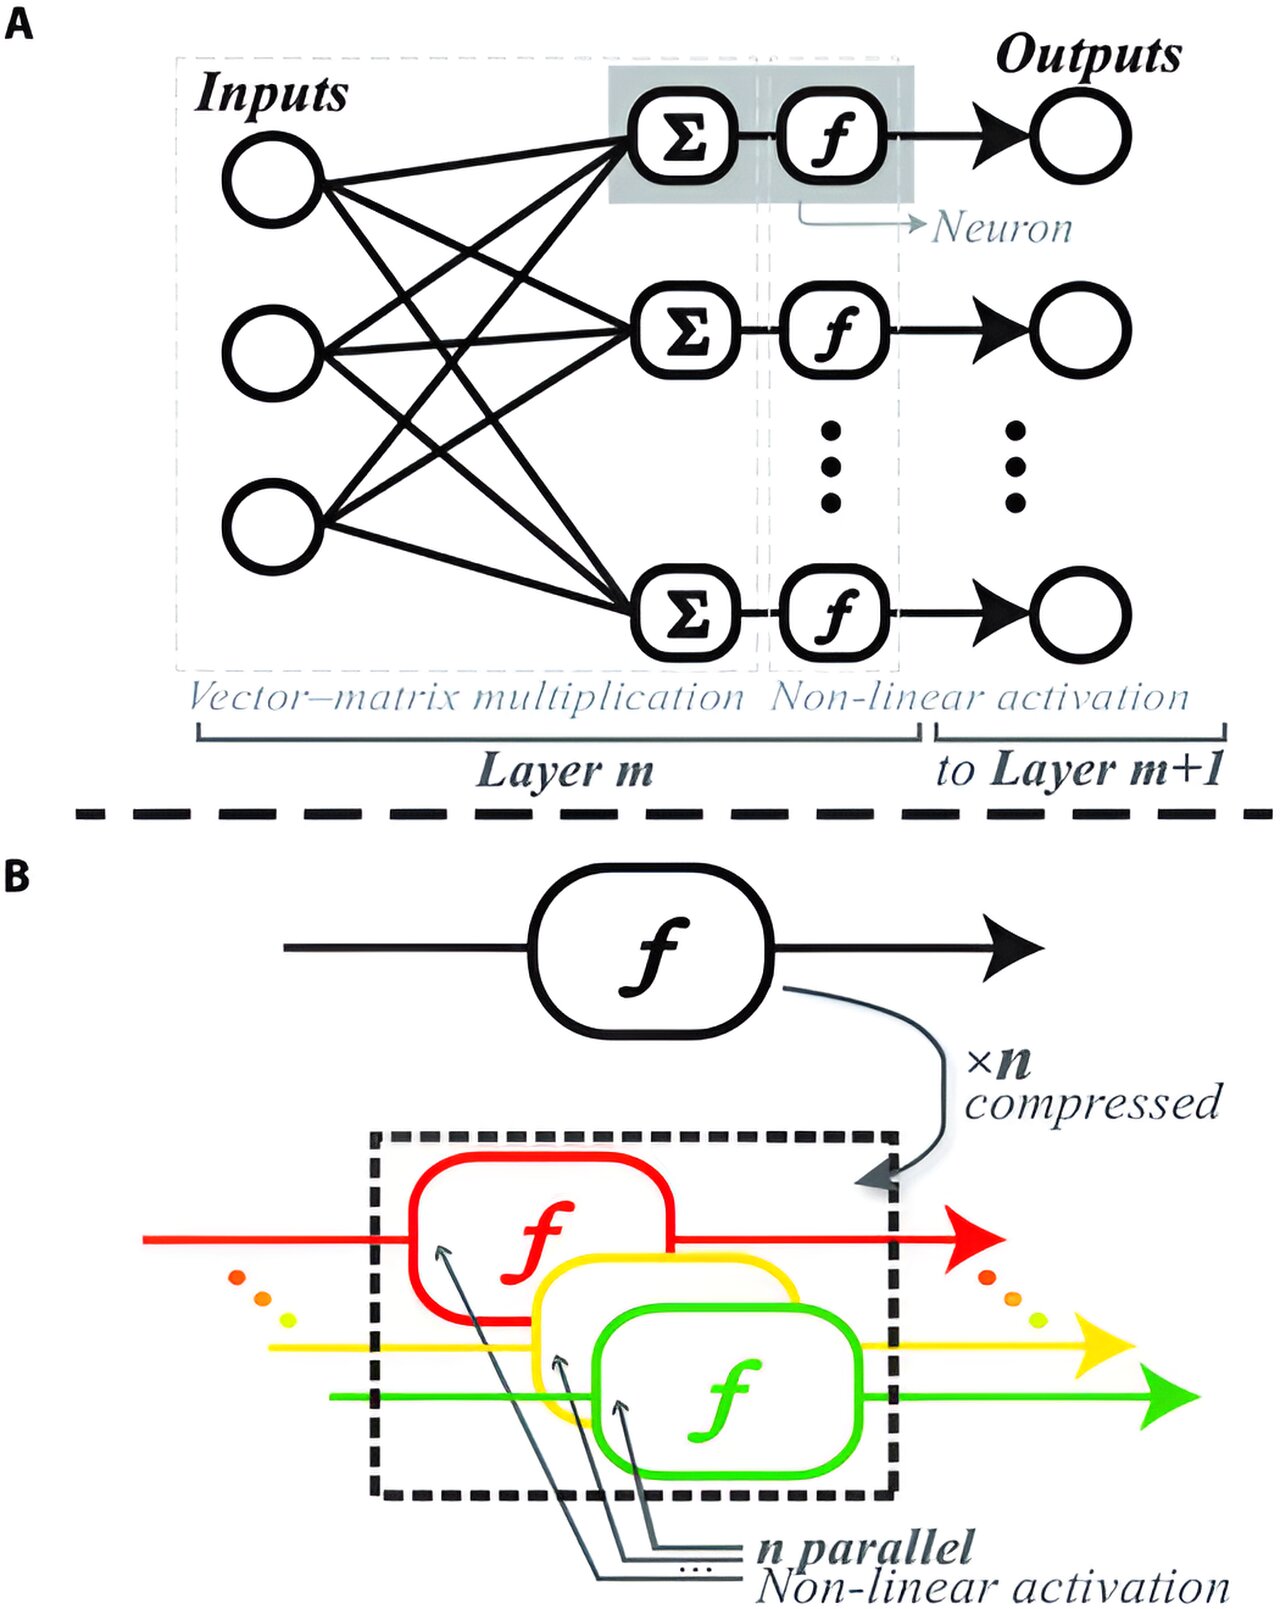 Multiplexed neuron sets make smaller optical neural networks possible